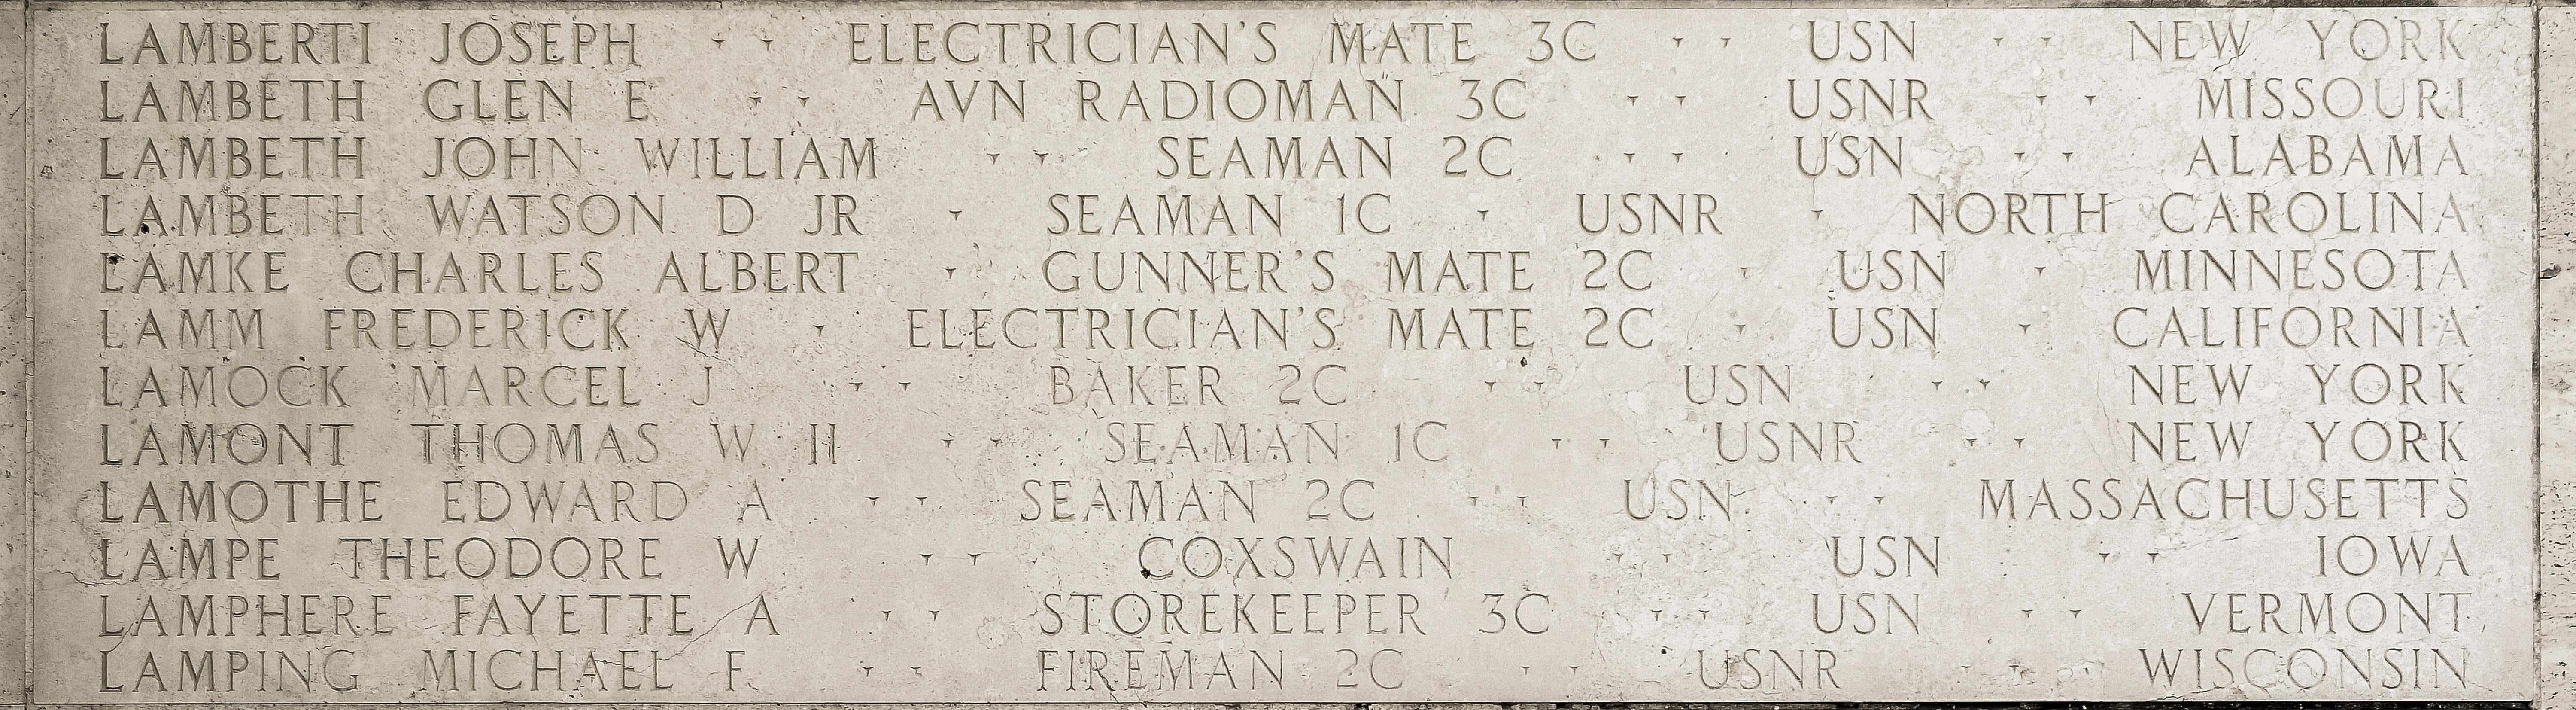 John William Lambeth, Seaman Second Class